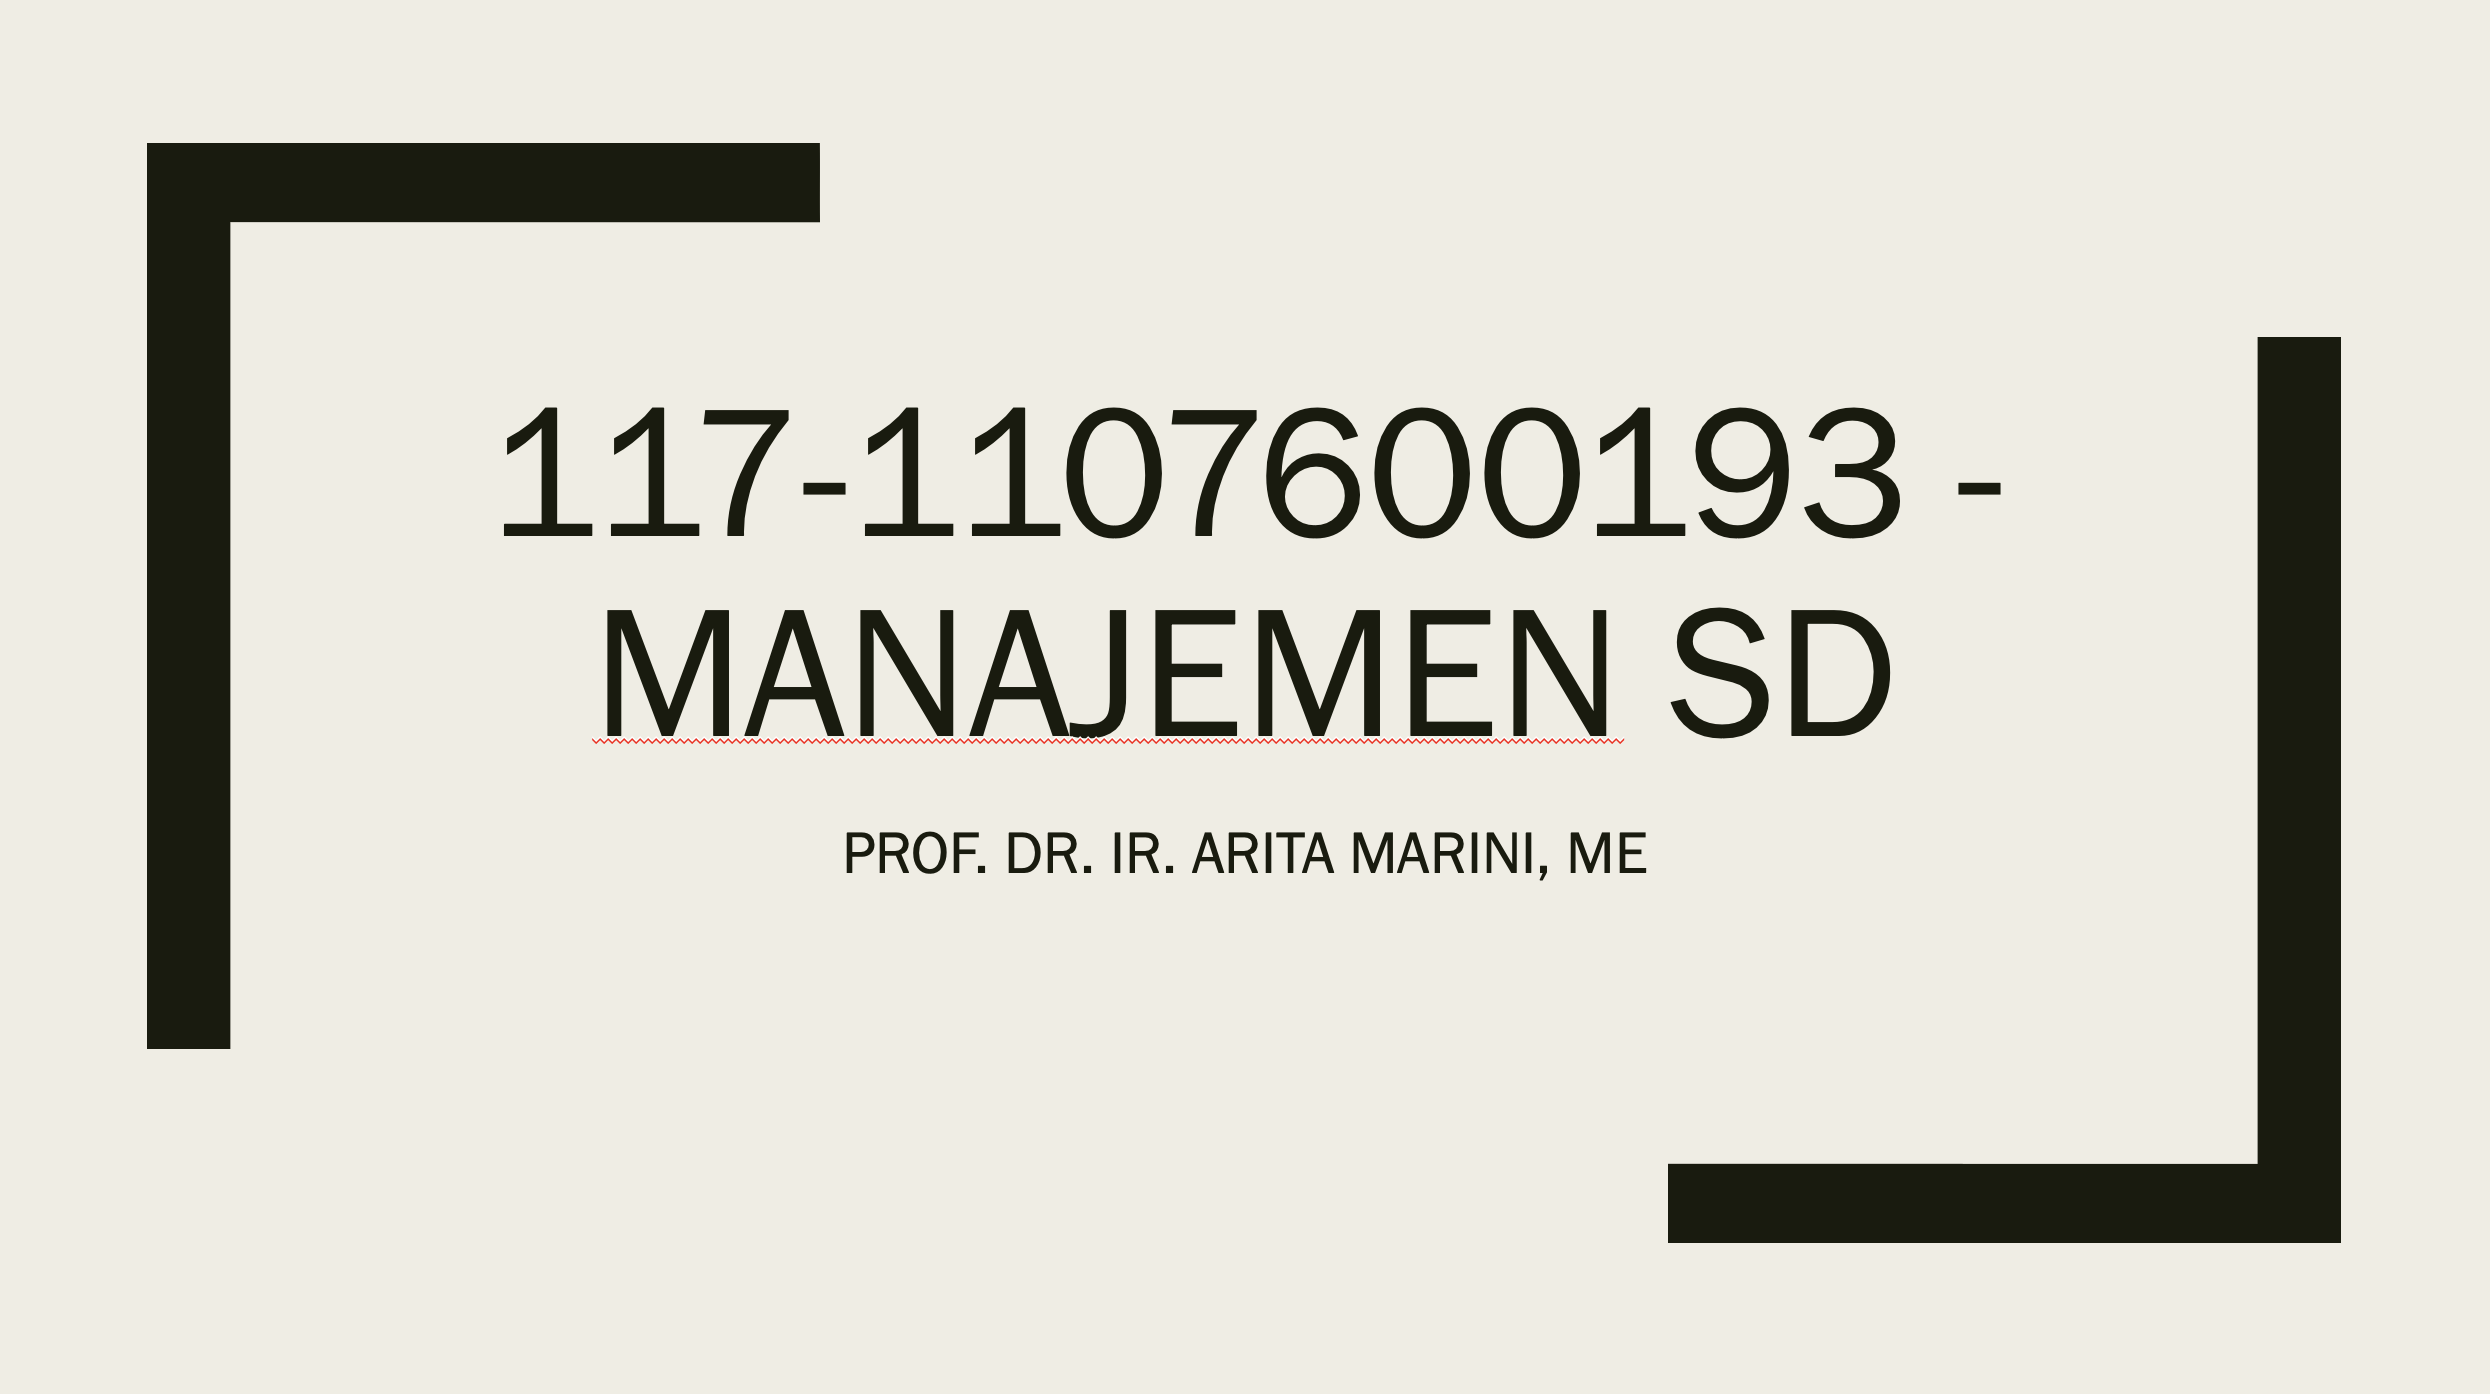 117-1107600193 -Manajemen SD-Arita Marini